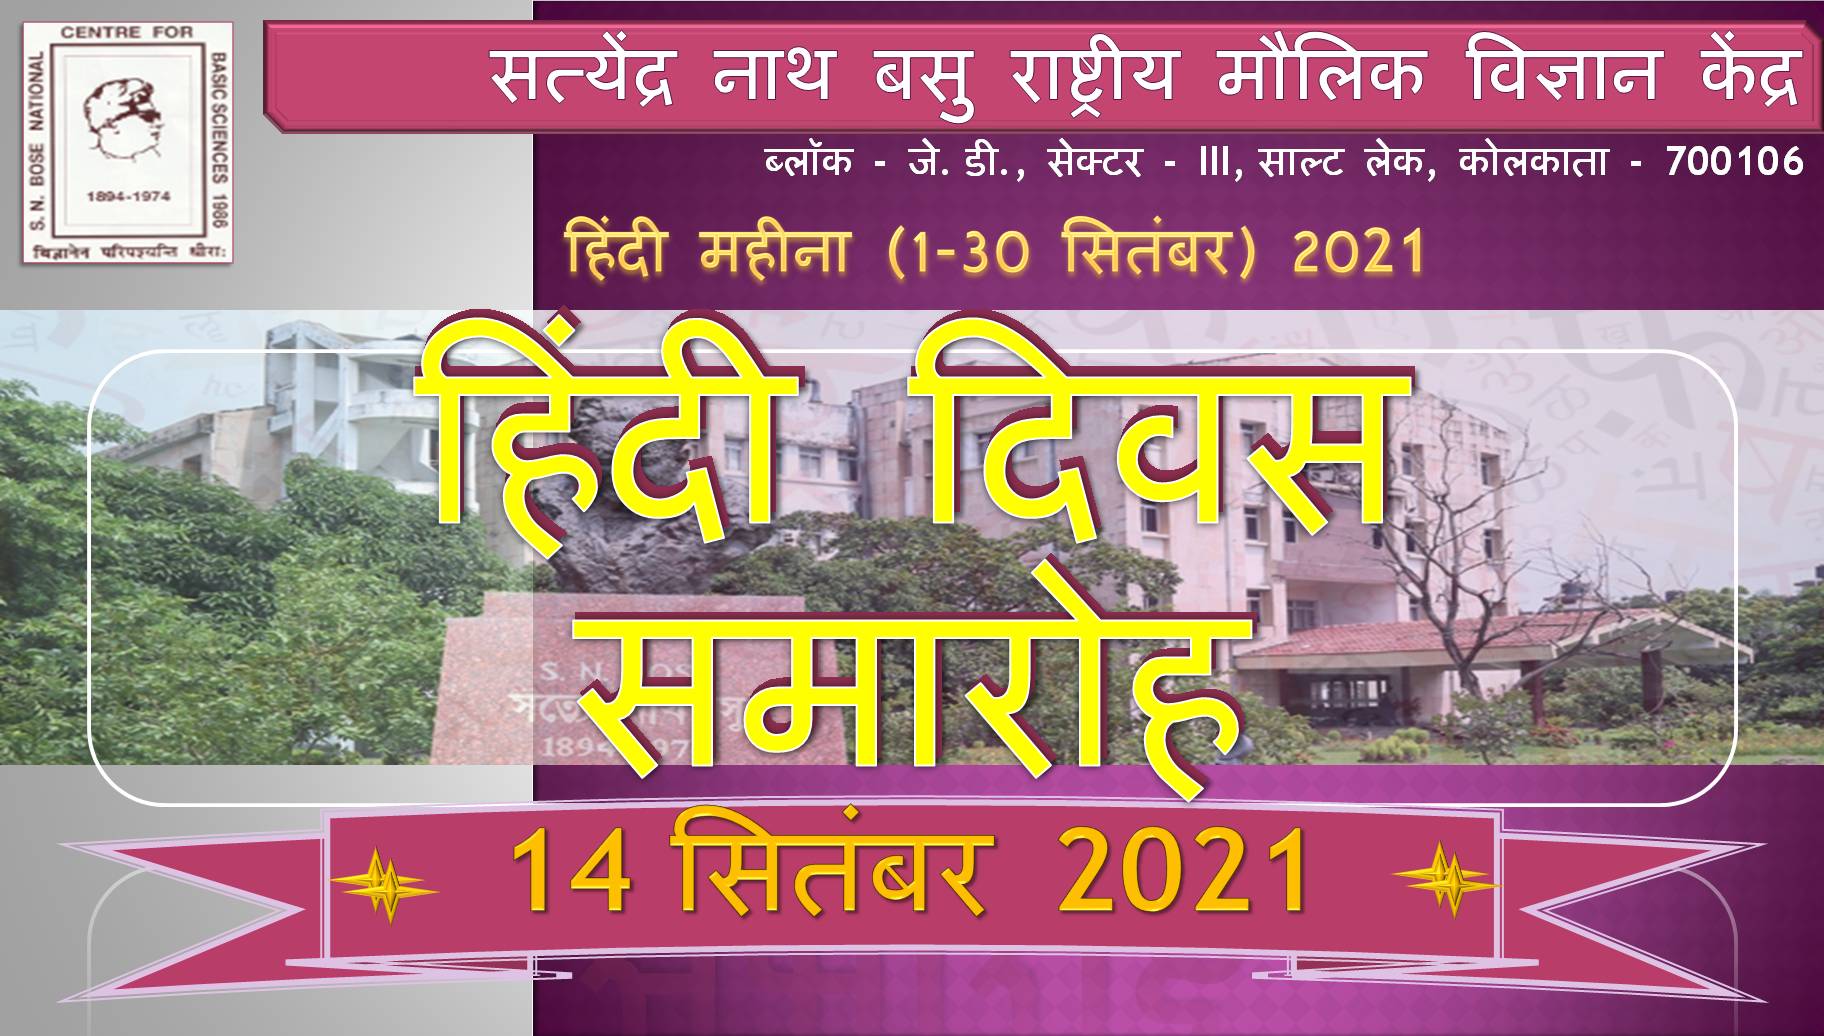 Celebration of Hindi Diwas 2021